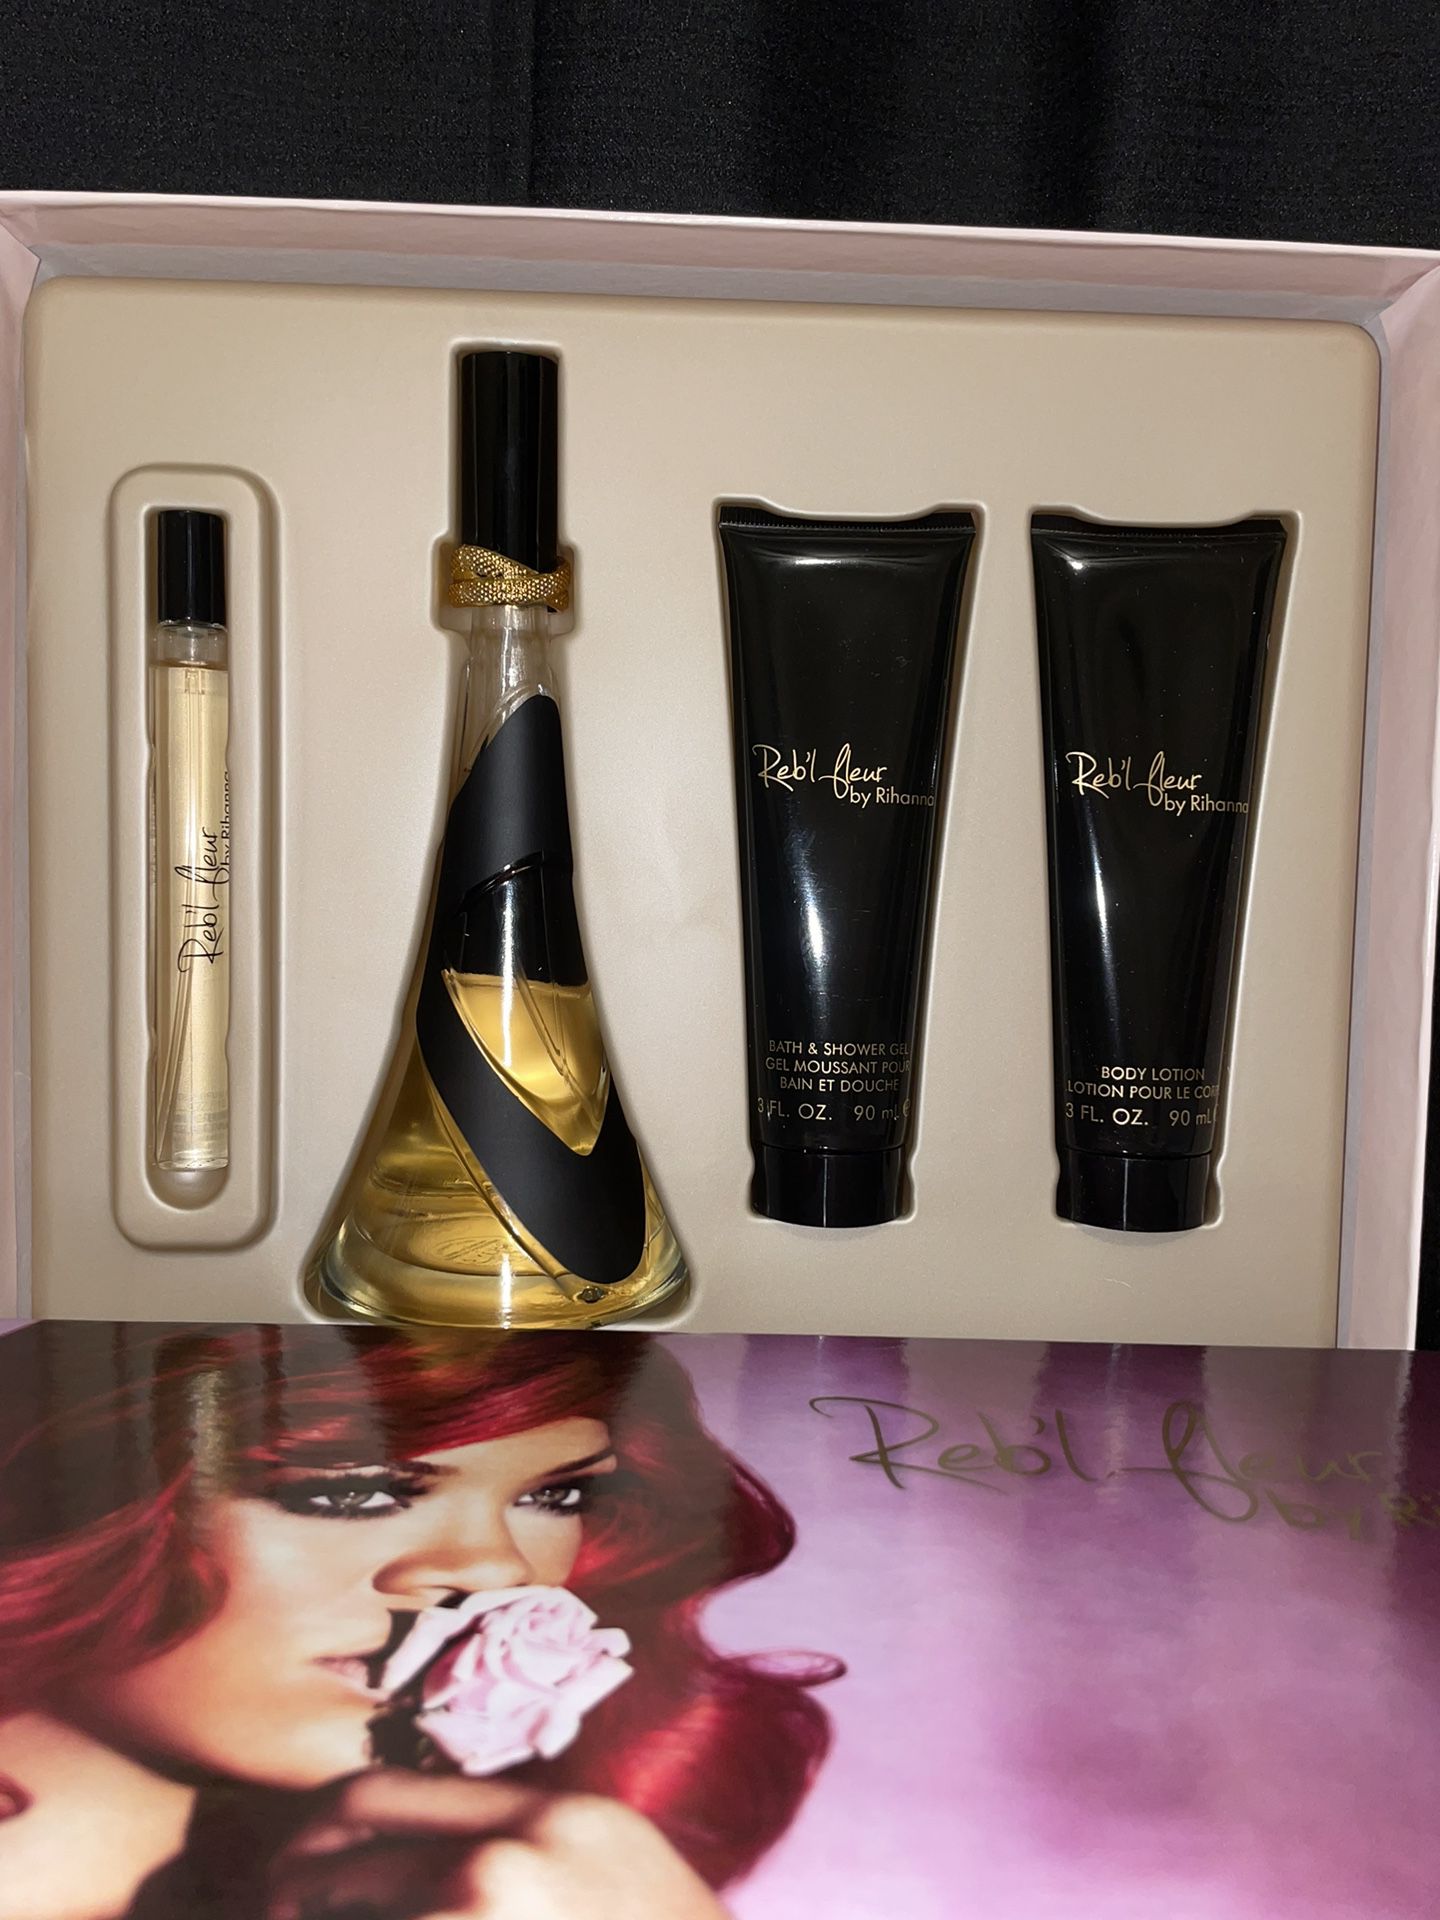 Reb'l Fleur by Rihanna Gift Set Perfume 